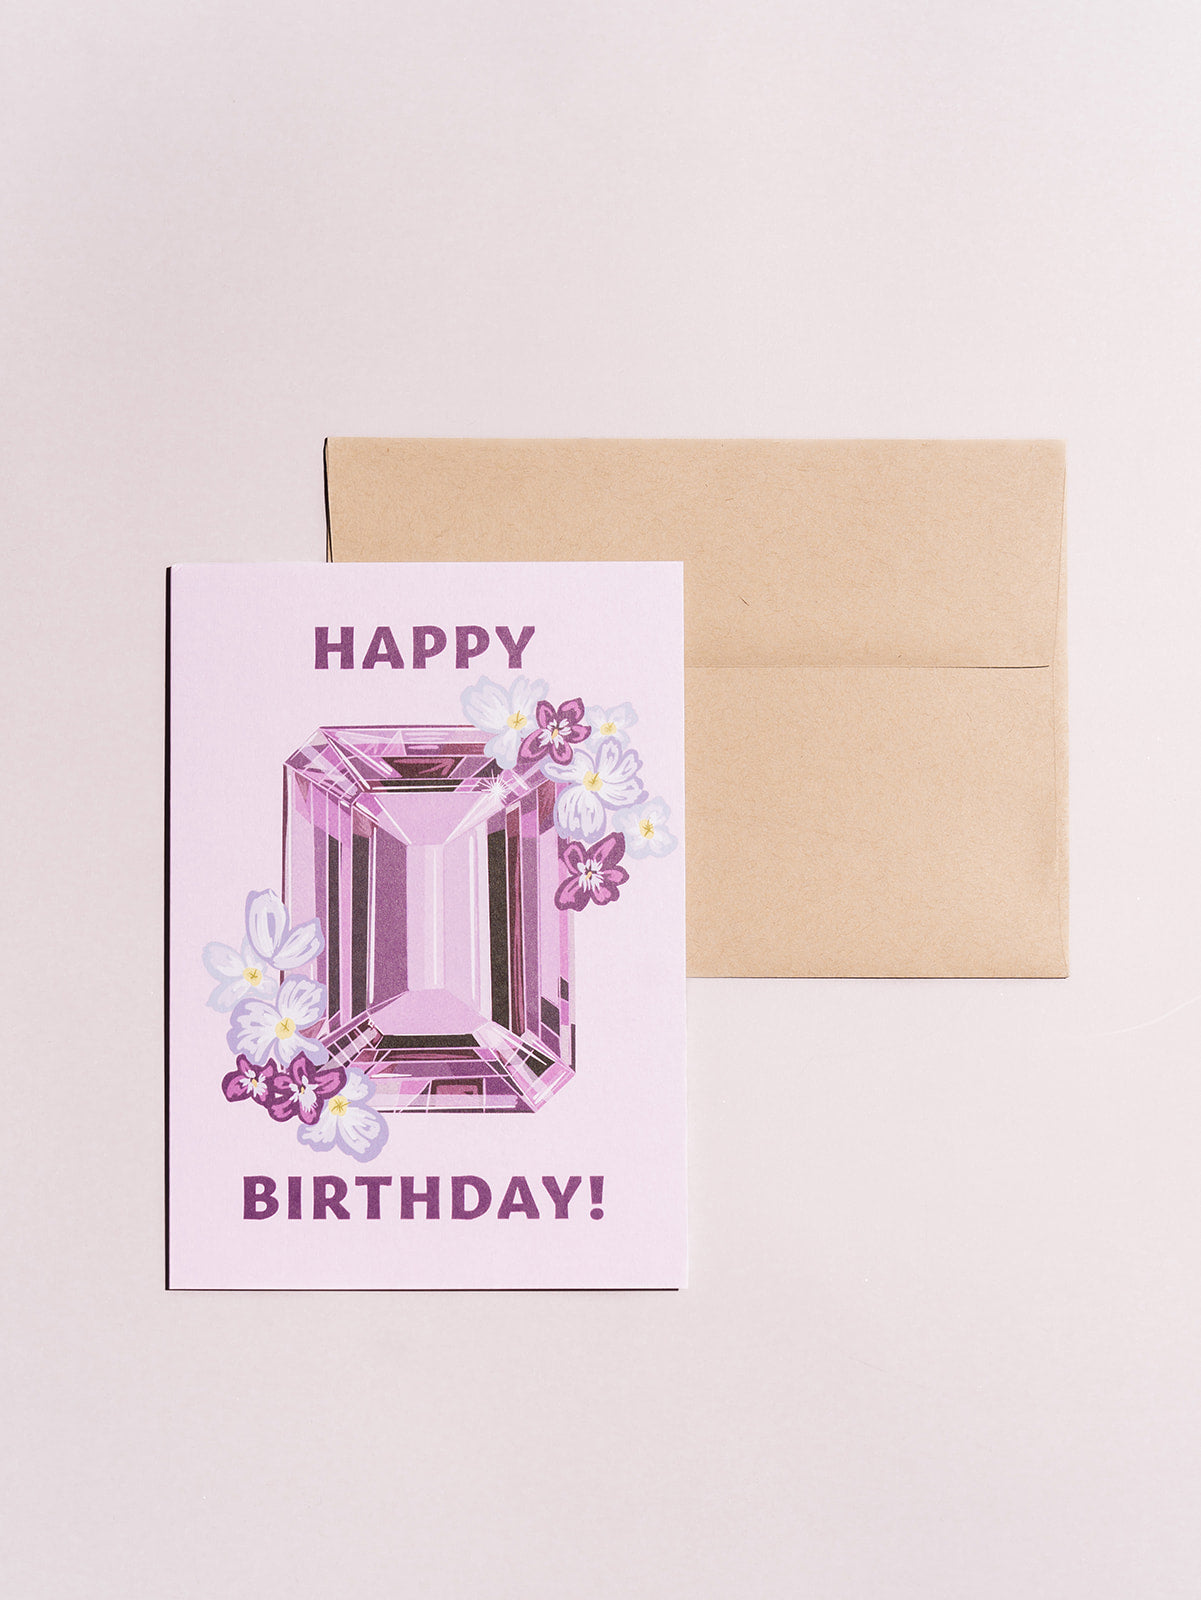 february amethyst birthstone gemstone birthday card with kraft envelope